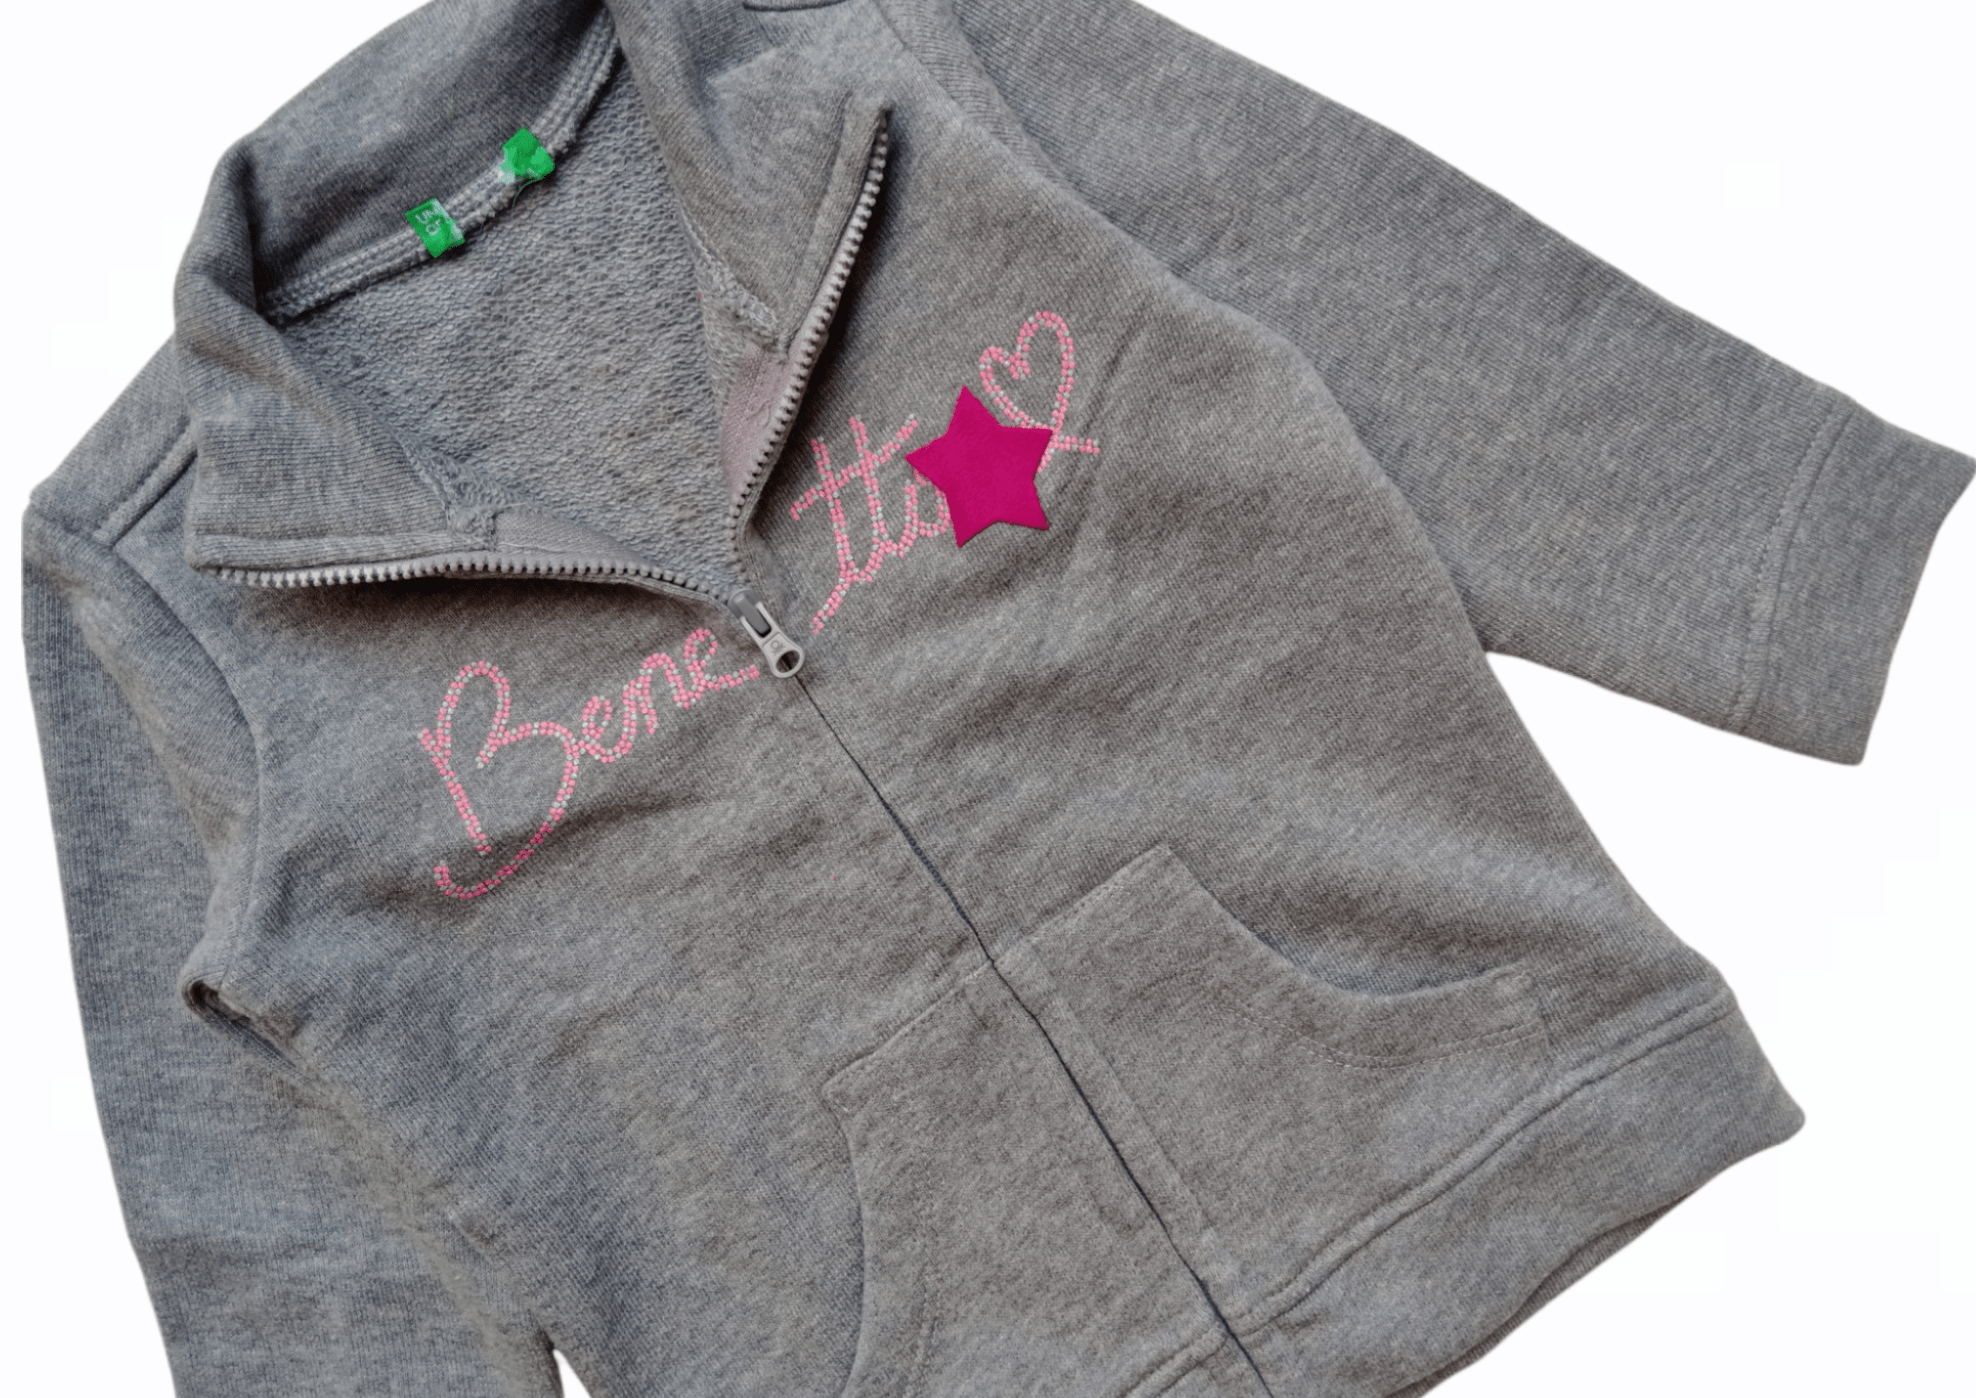 ElOutlet Kids Sweatshirts Girls Benetton Zip-Through Jacket - Dark Grey